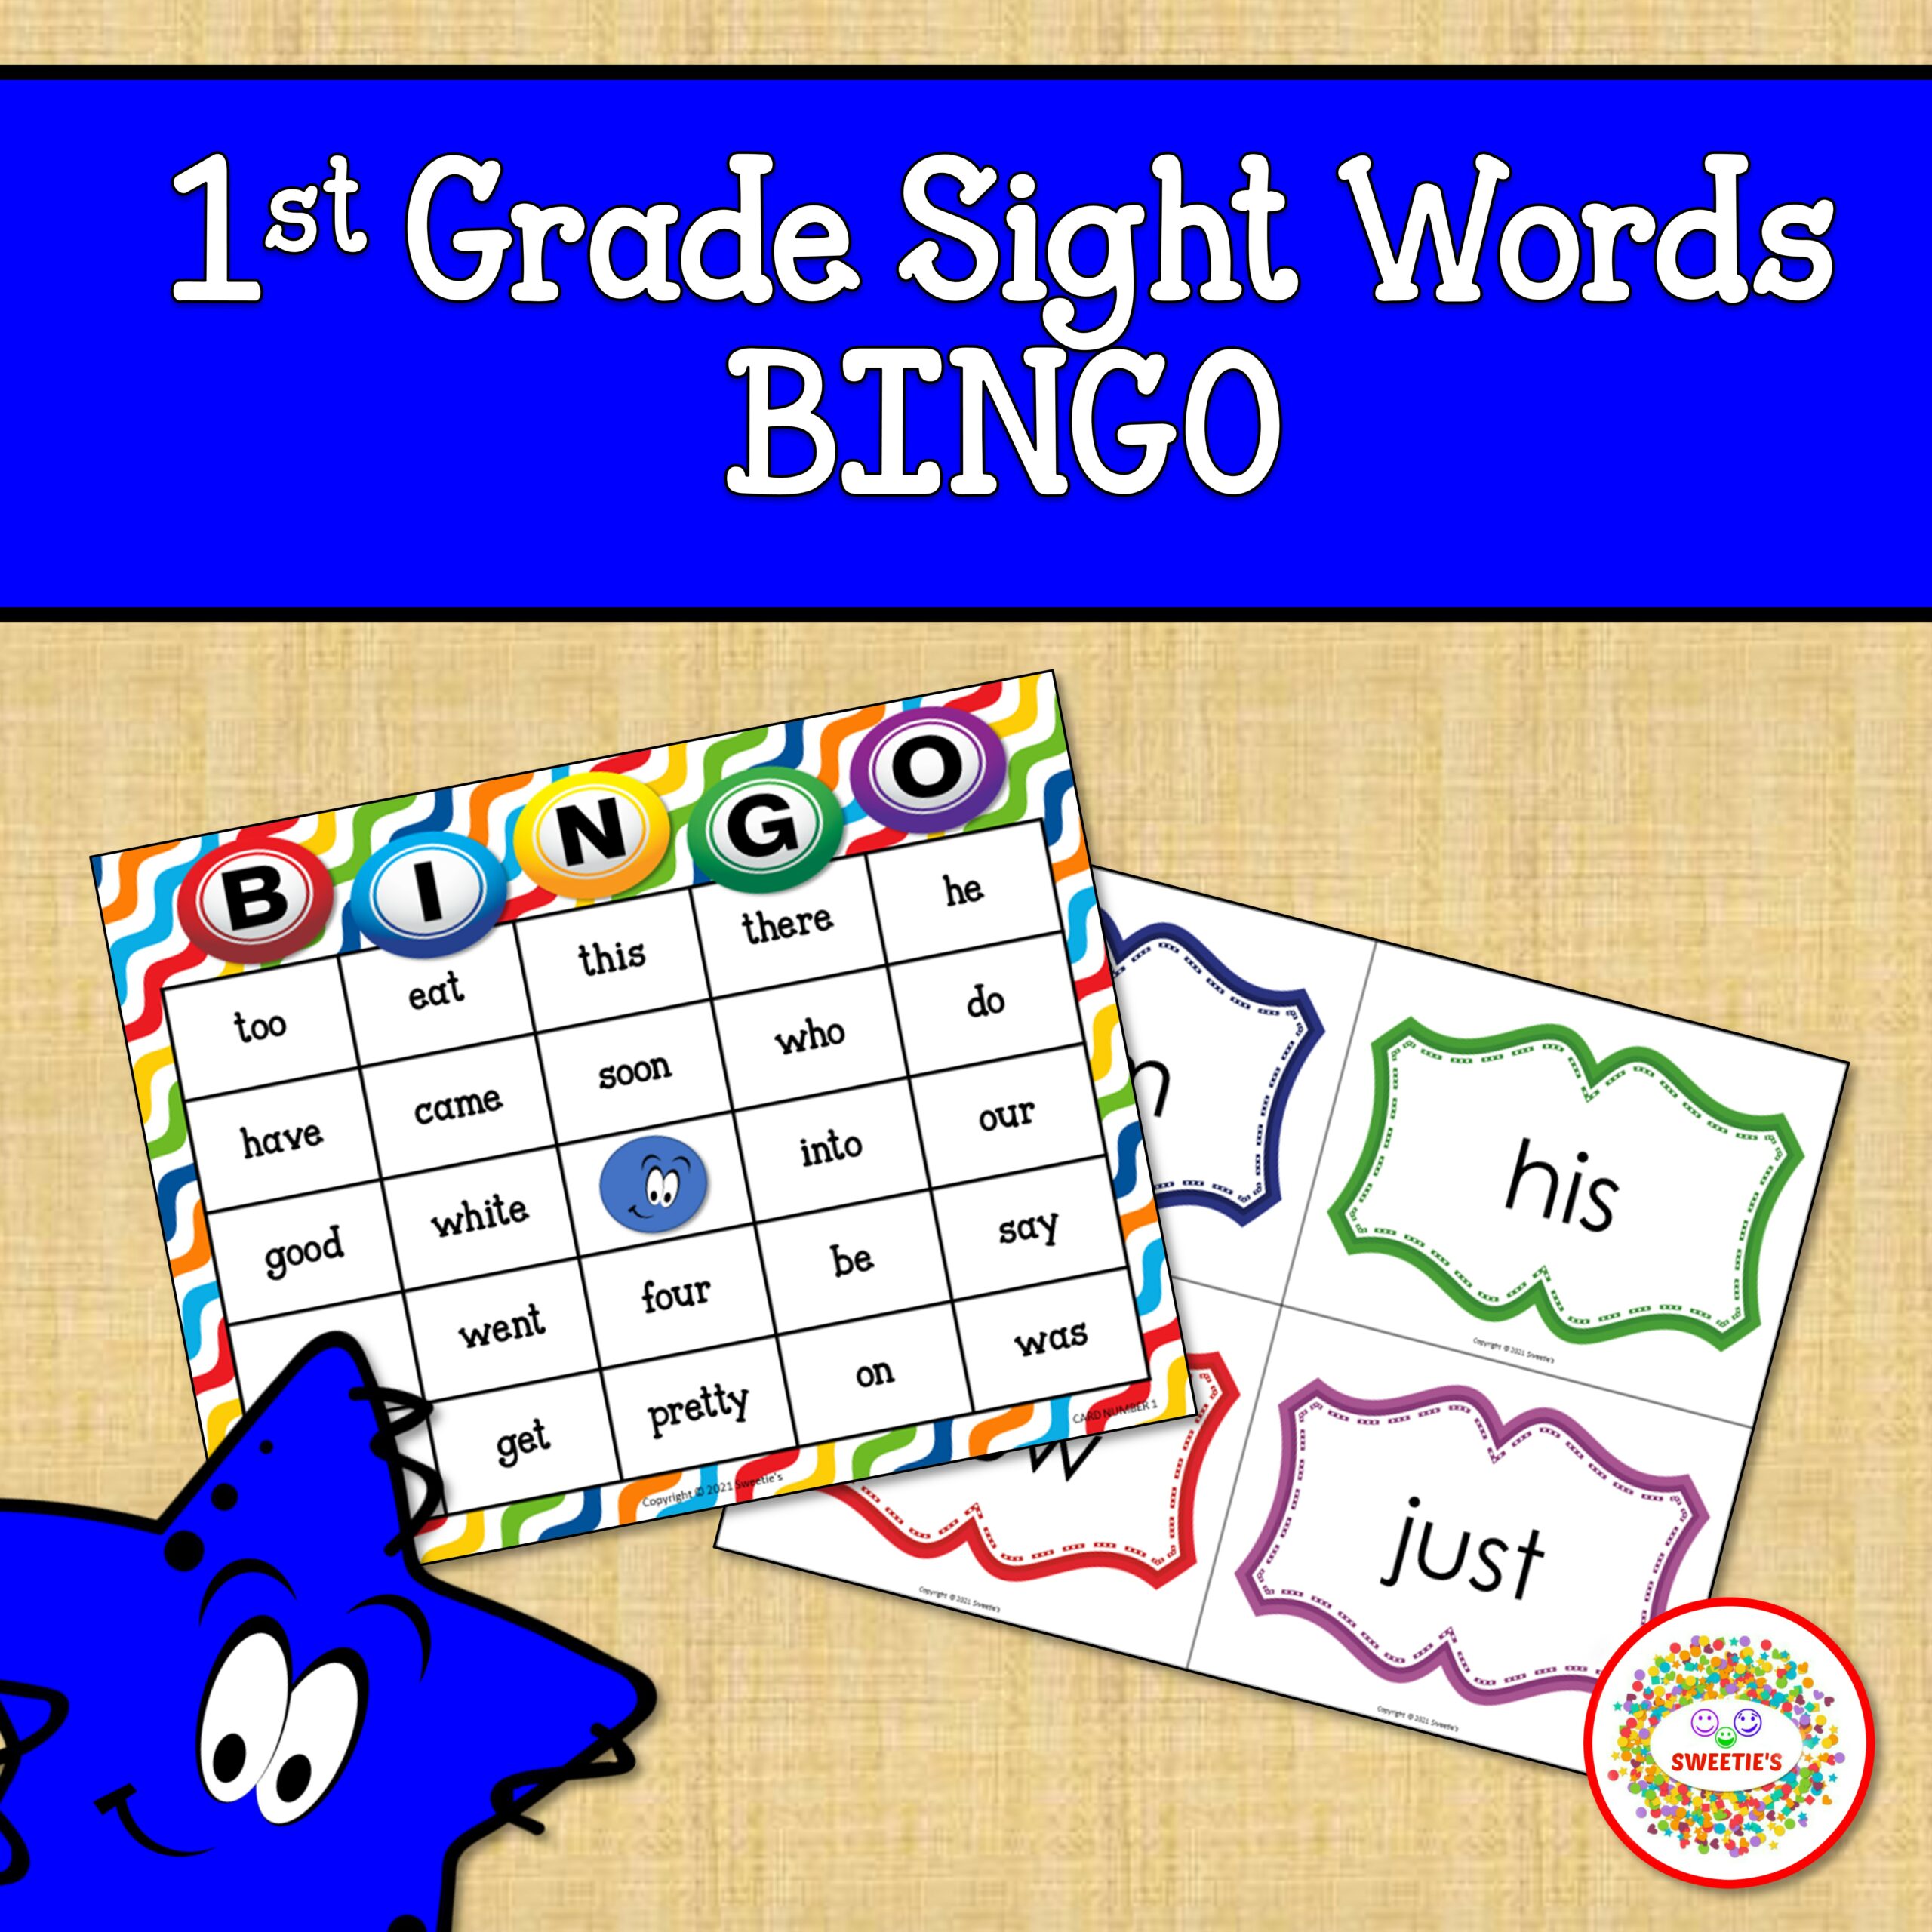 1st Grade Sight Words Bingo